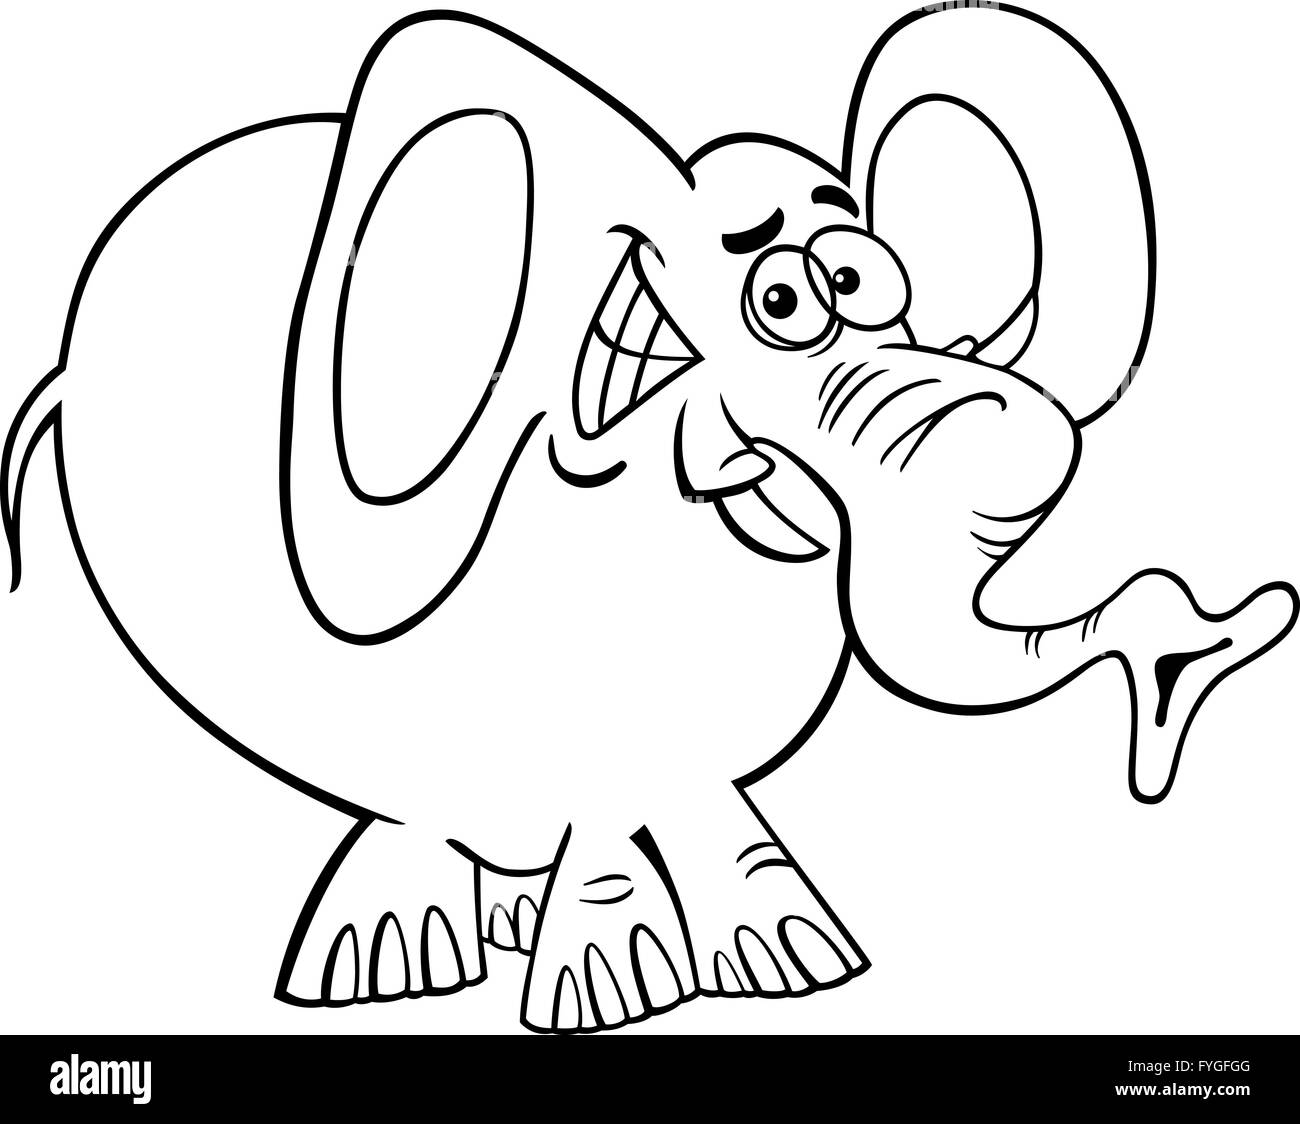 cartoon elephant for coloring book Stock Photo - Alamy